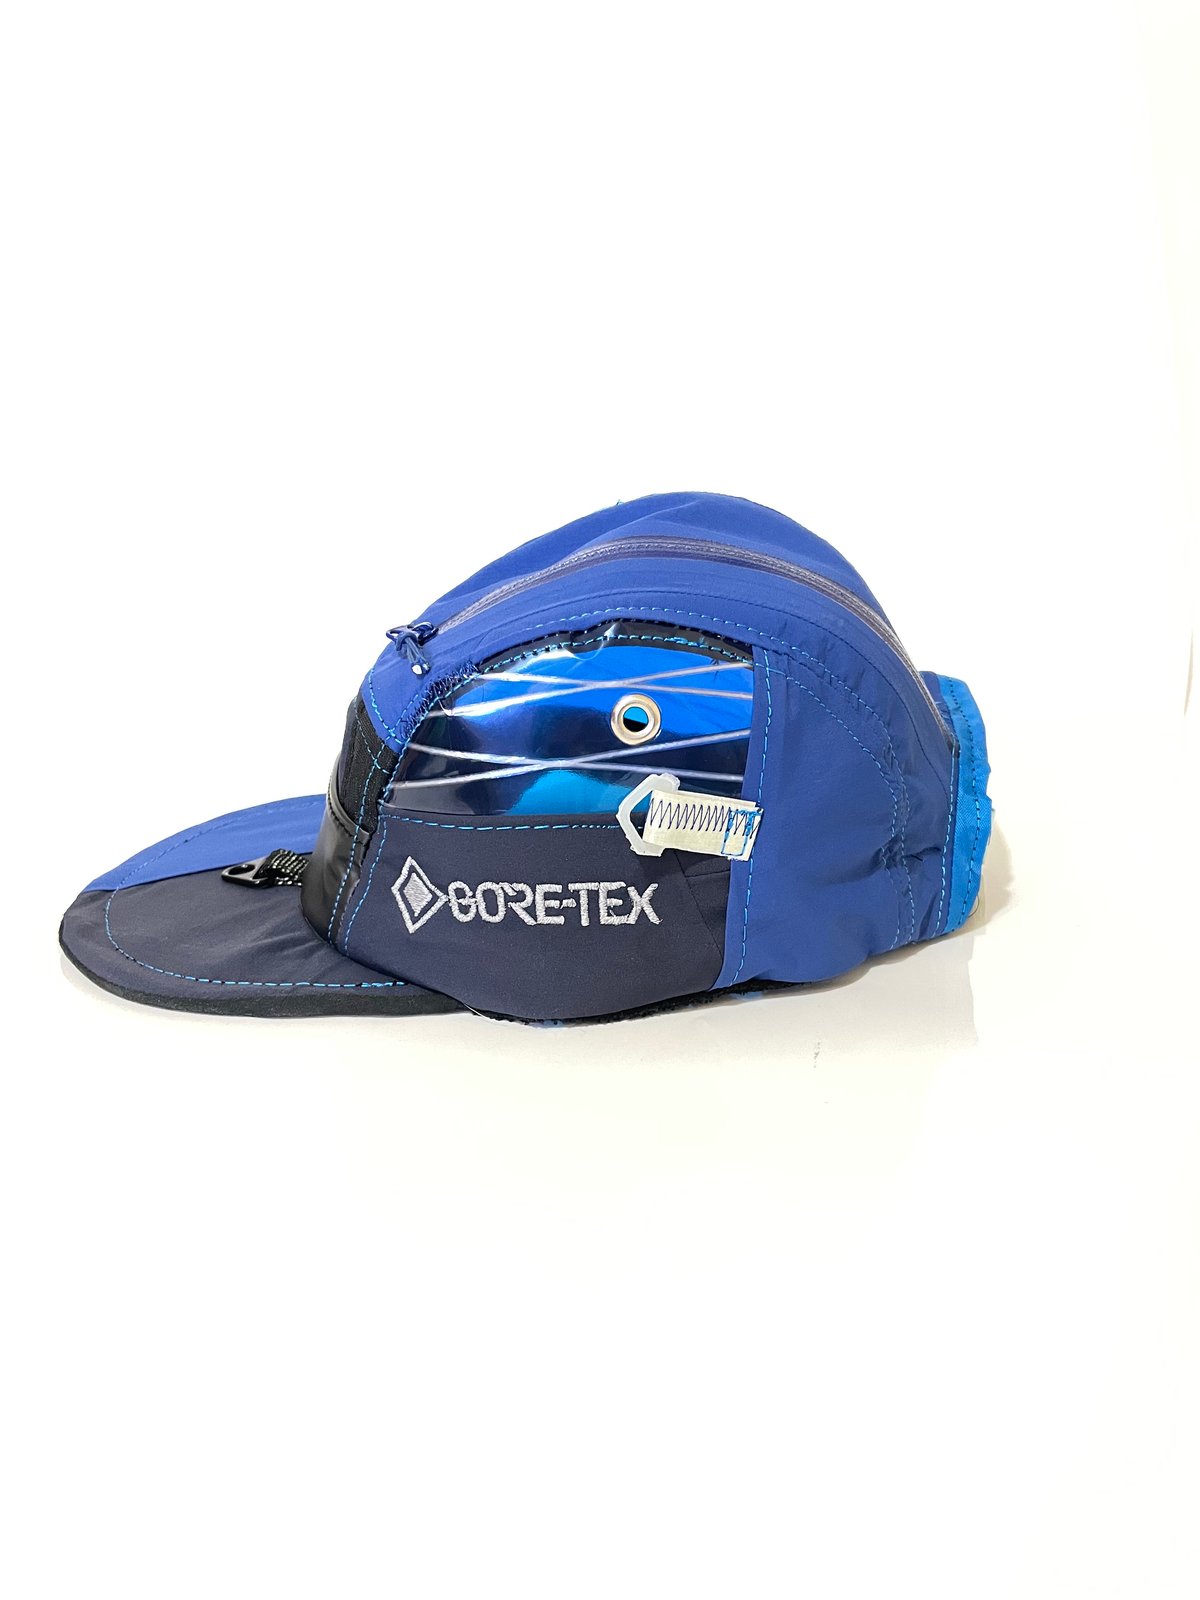 Arcteryx Goretex Shell x Sailcloth x 3M w/ TPU Front Pocket